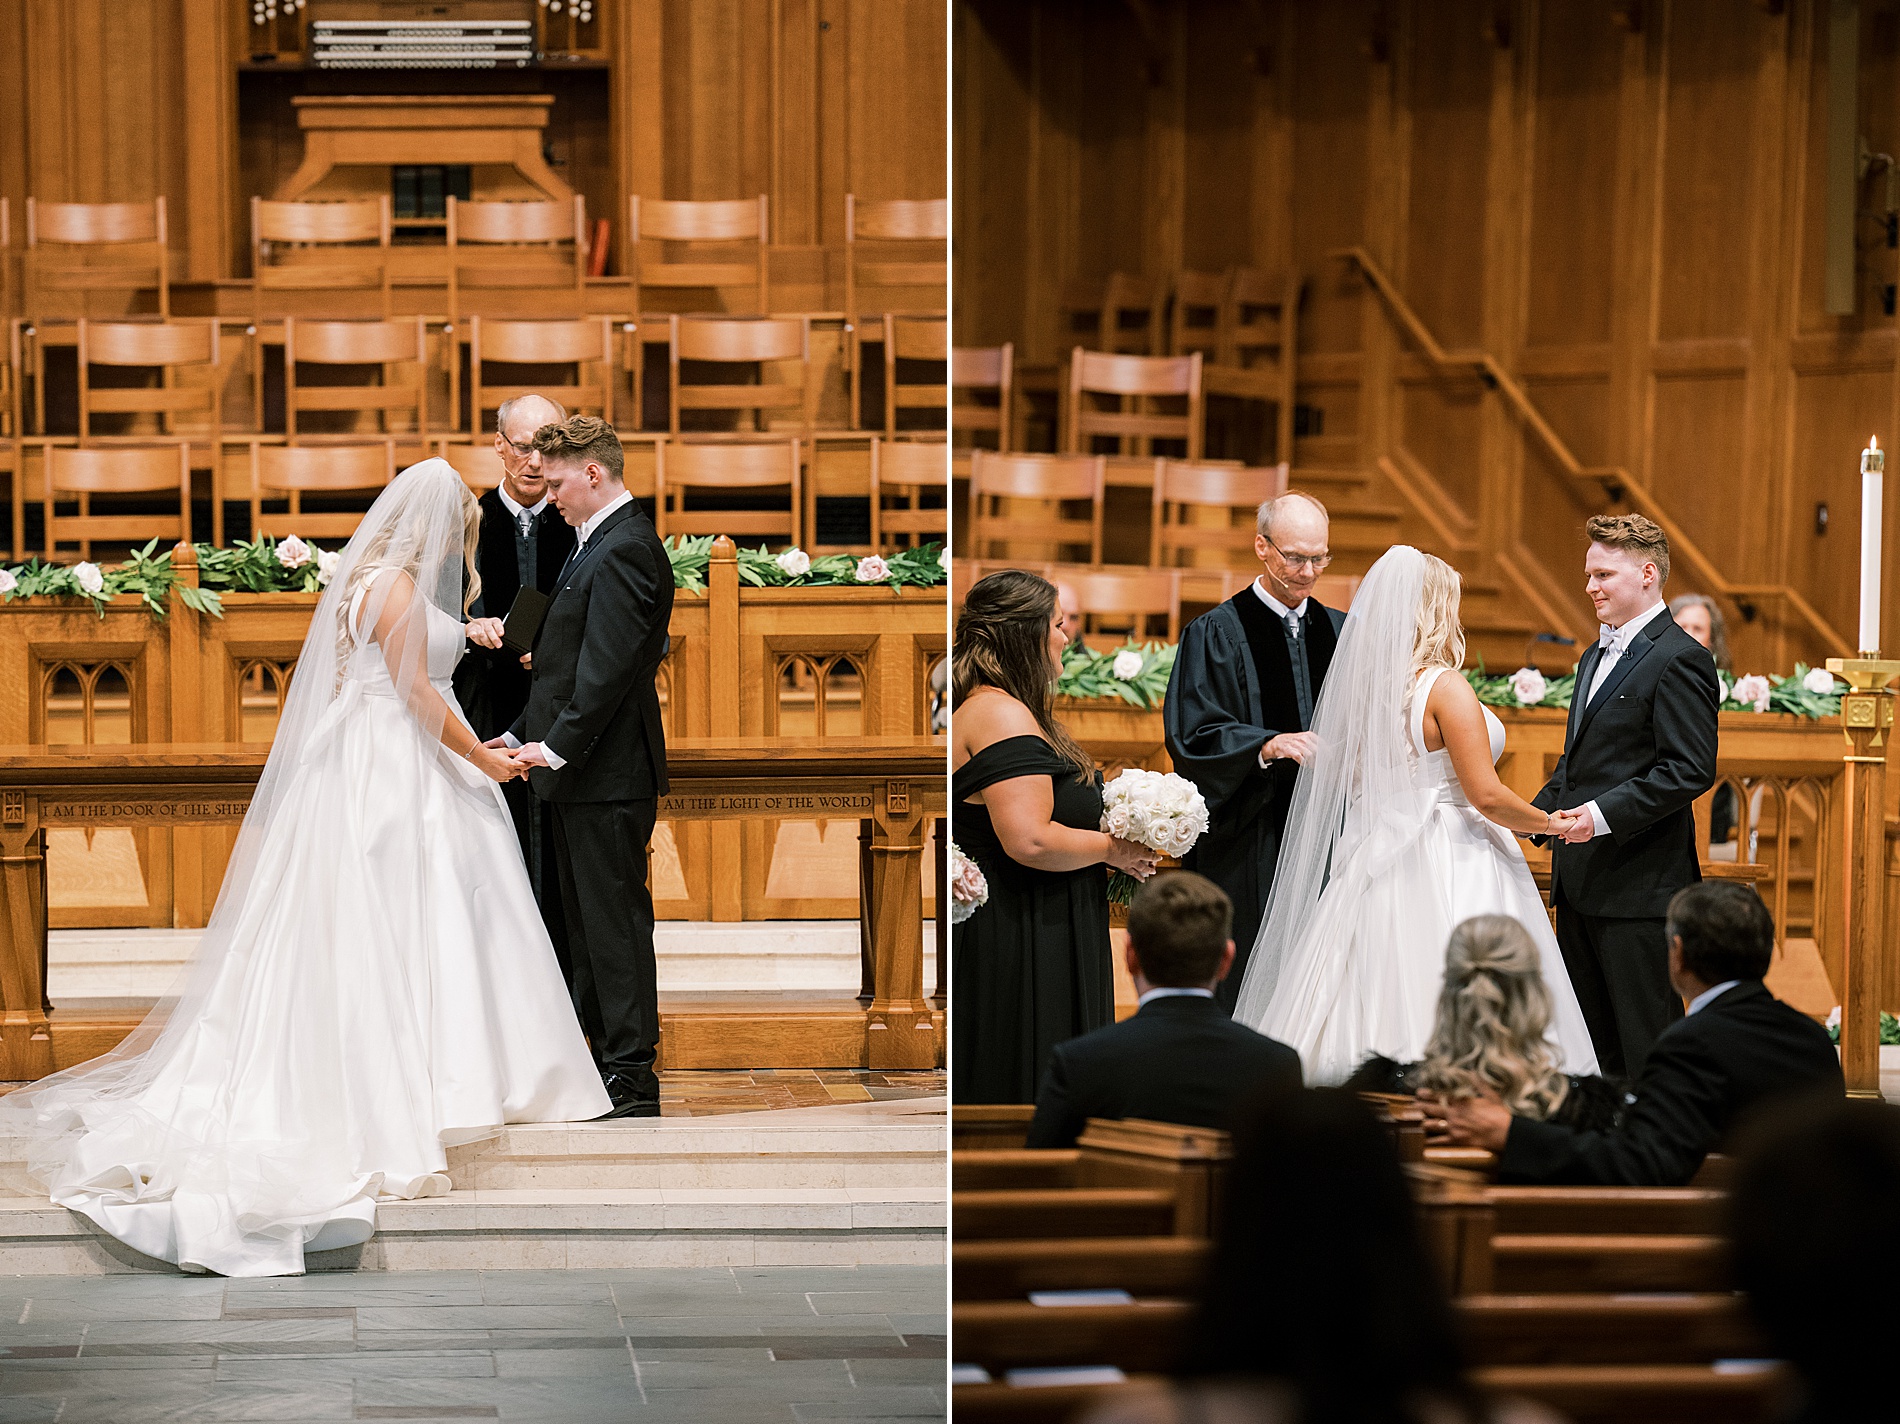 Nashville wedding ceremony at Covenant Presbyterian